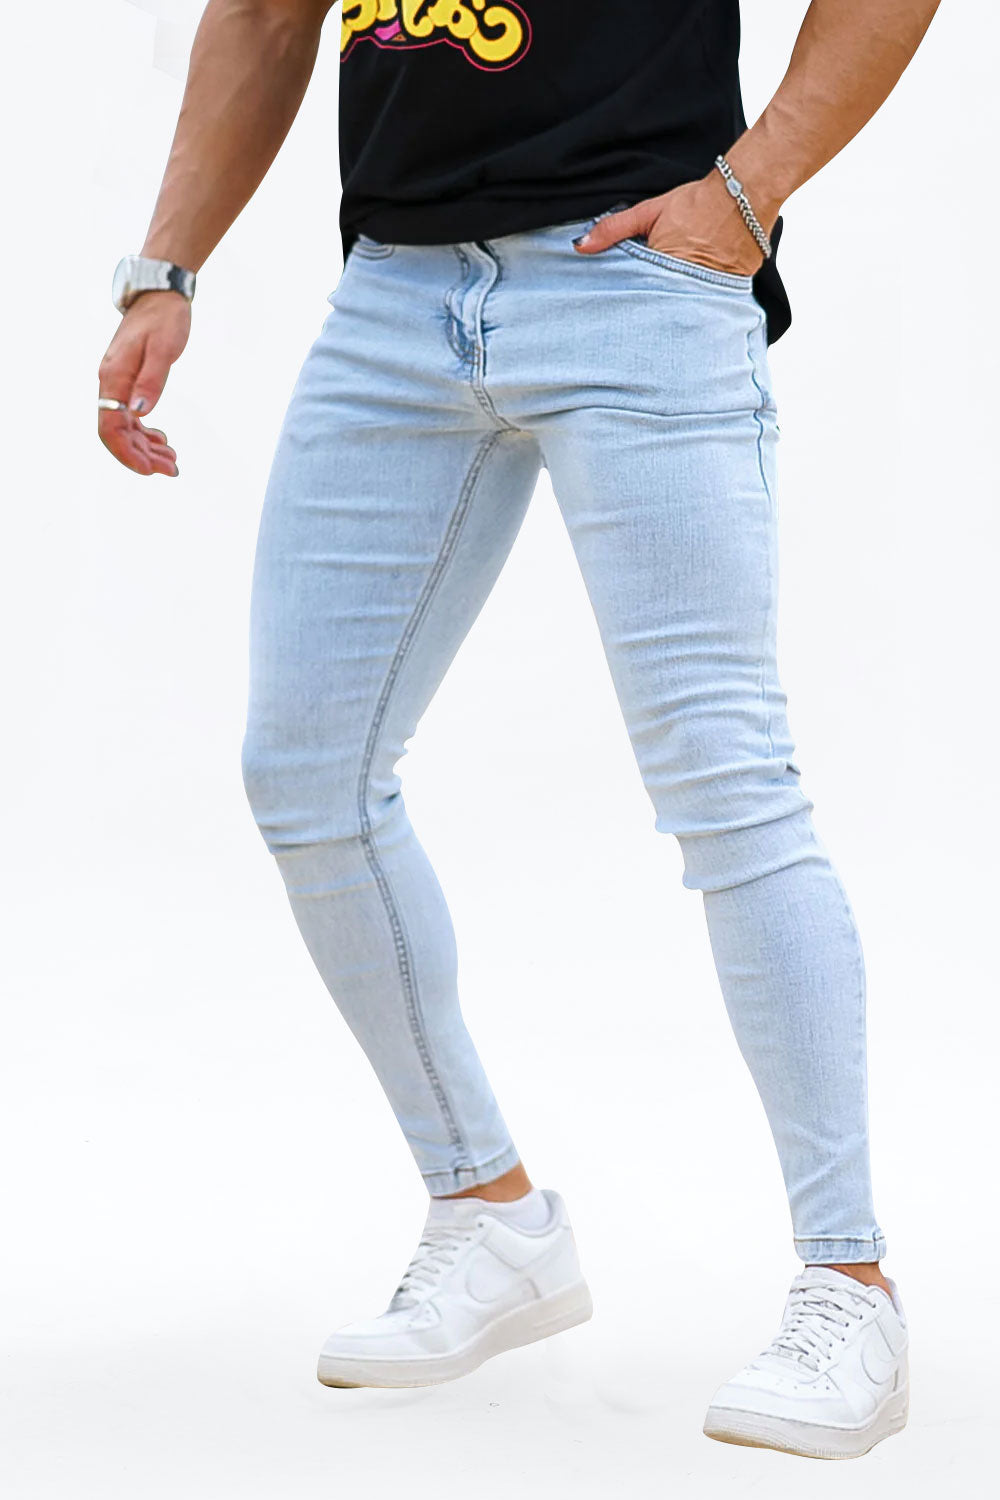 Gingtto Mens Light Blue Stylish Skinny Fashion Jeans Stretch Denim